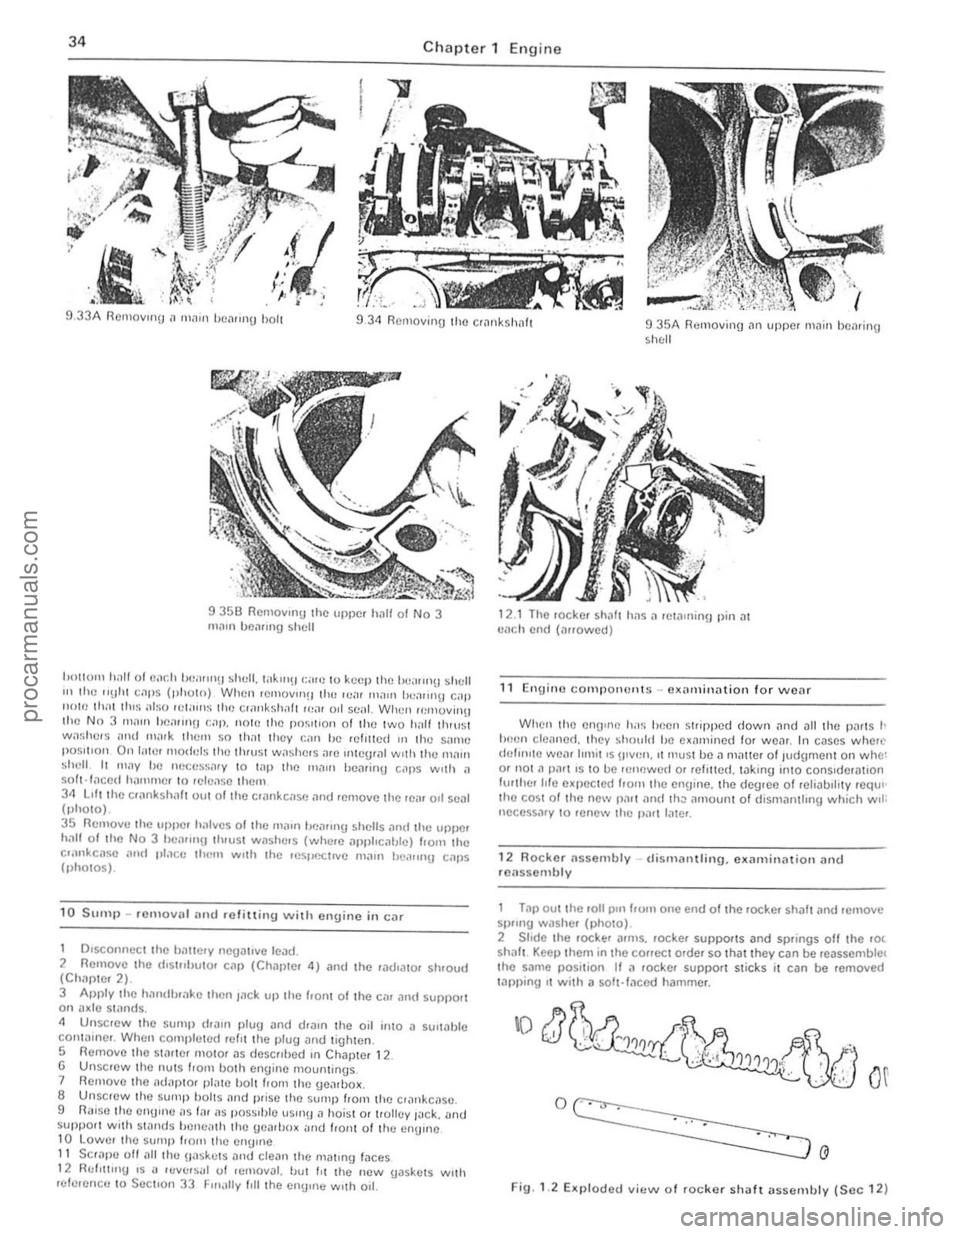 FORD CAPRI 1974 Owners Guide 34 Chapter 1 Engine 
. V I ~. , . 
I  I : 1 _: . . . 
9 .33A flerllovlllU n  m,l"  /)(:,lrrl1g h011 934 flemovinu Iho crnl1kshah 9 35A n"movino In upper rnolill henrillO 5oh(:11 
935U flernovrllU